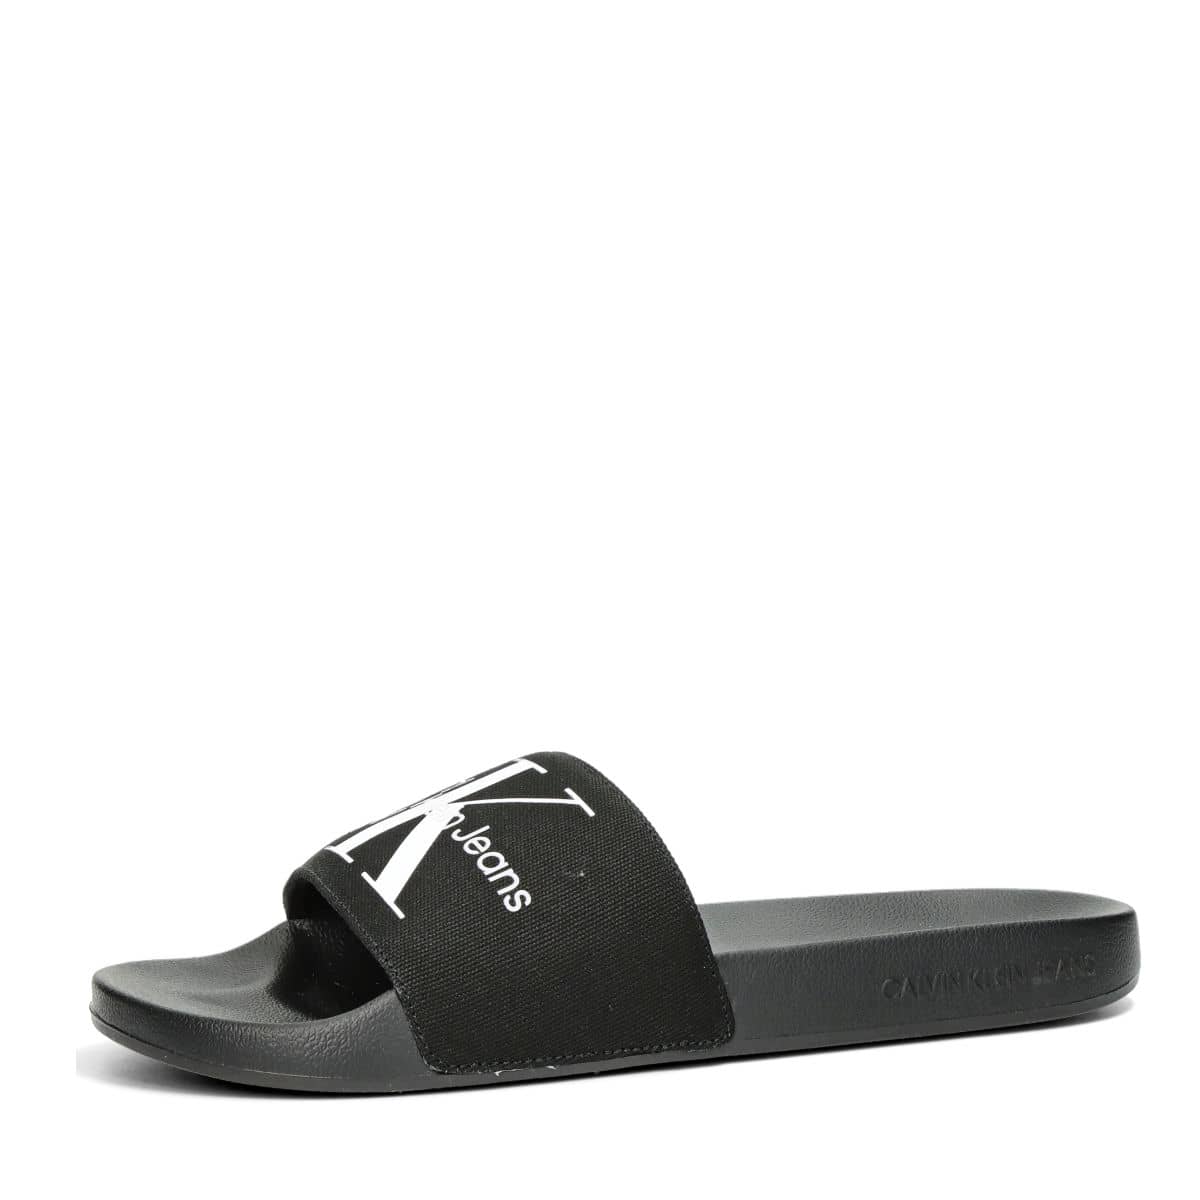 Calvin Klein classic slippers black |